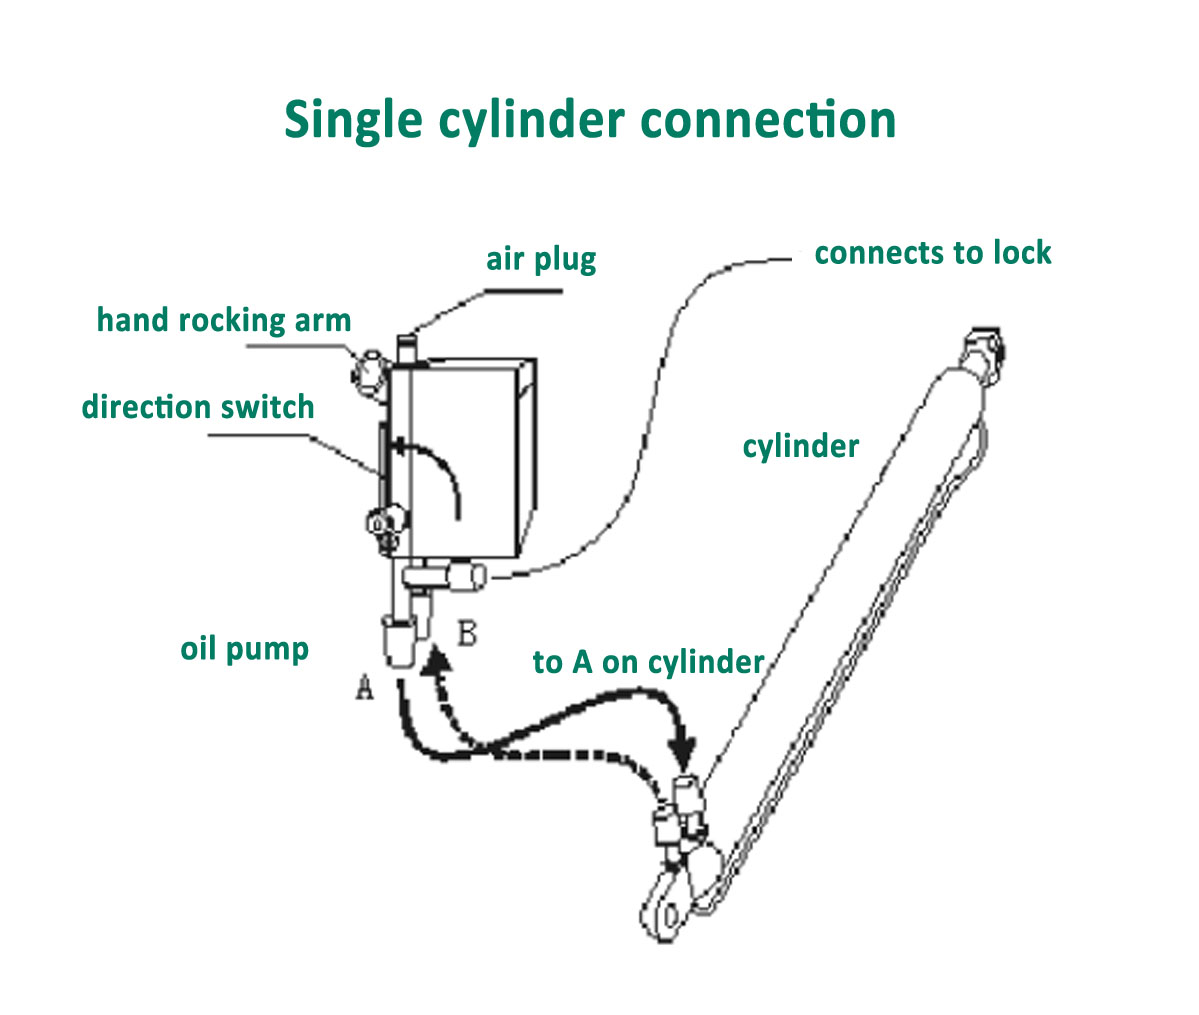 Single cylinder